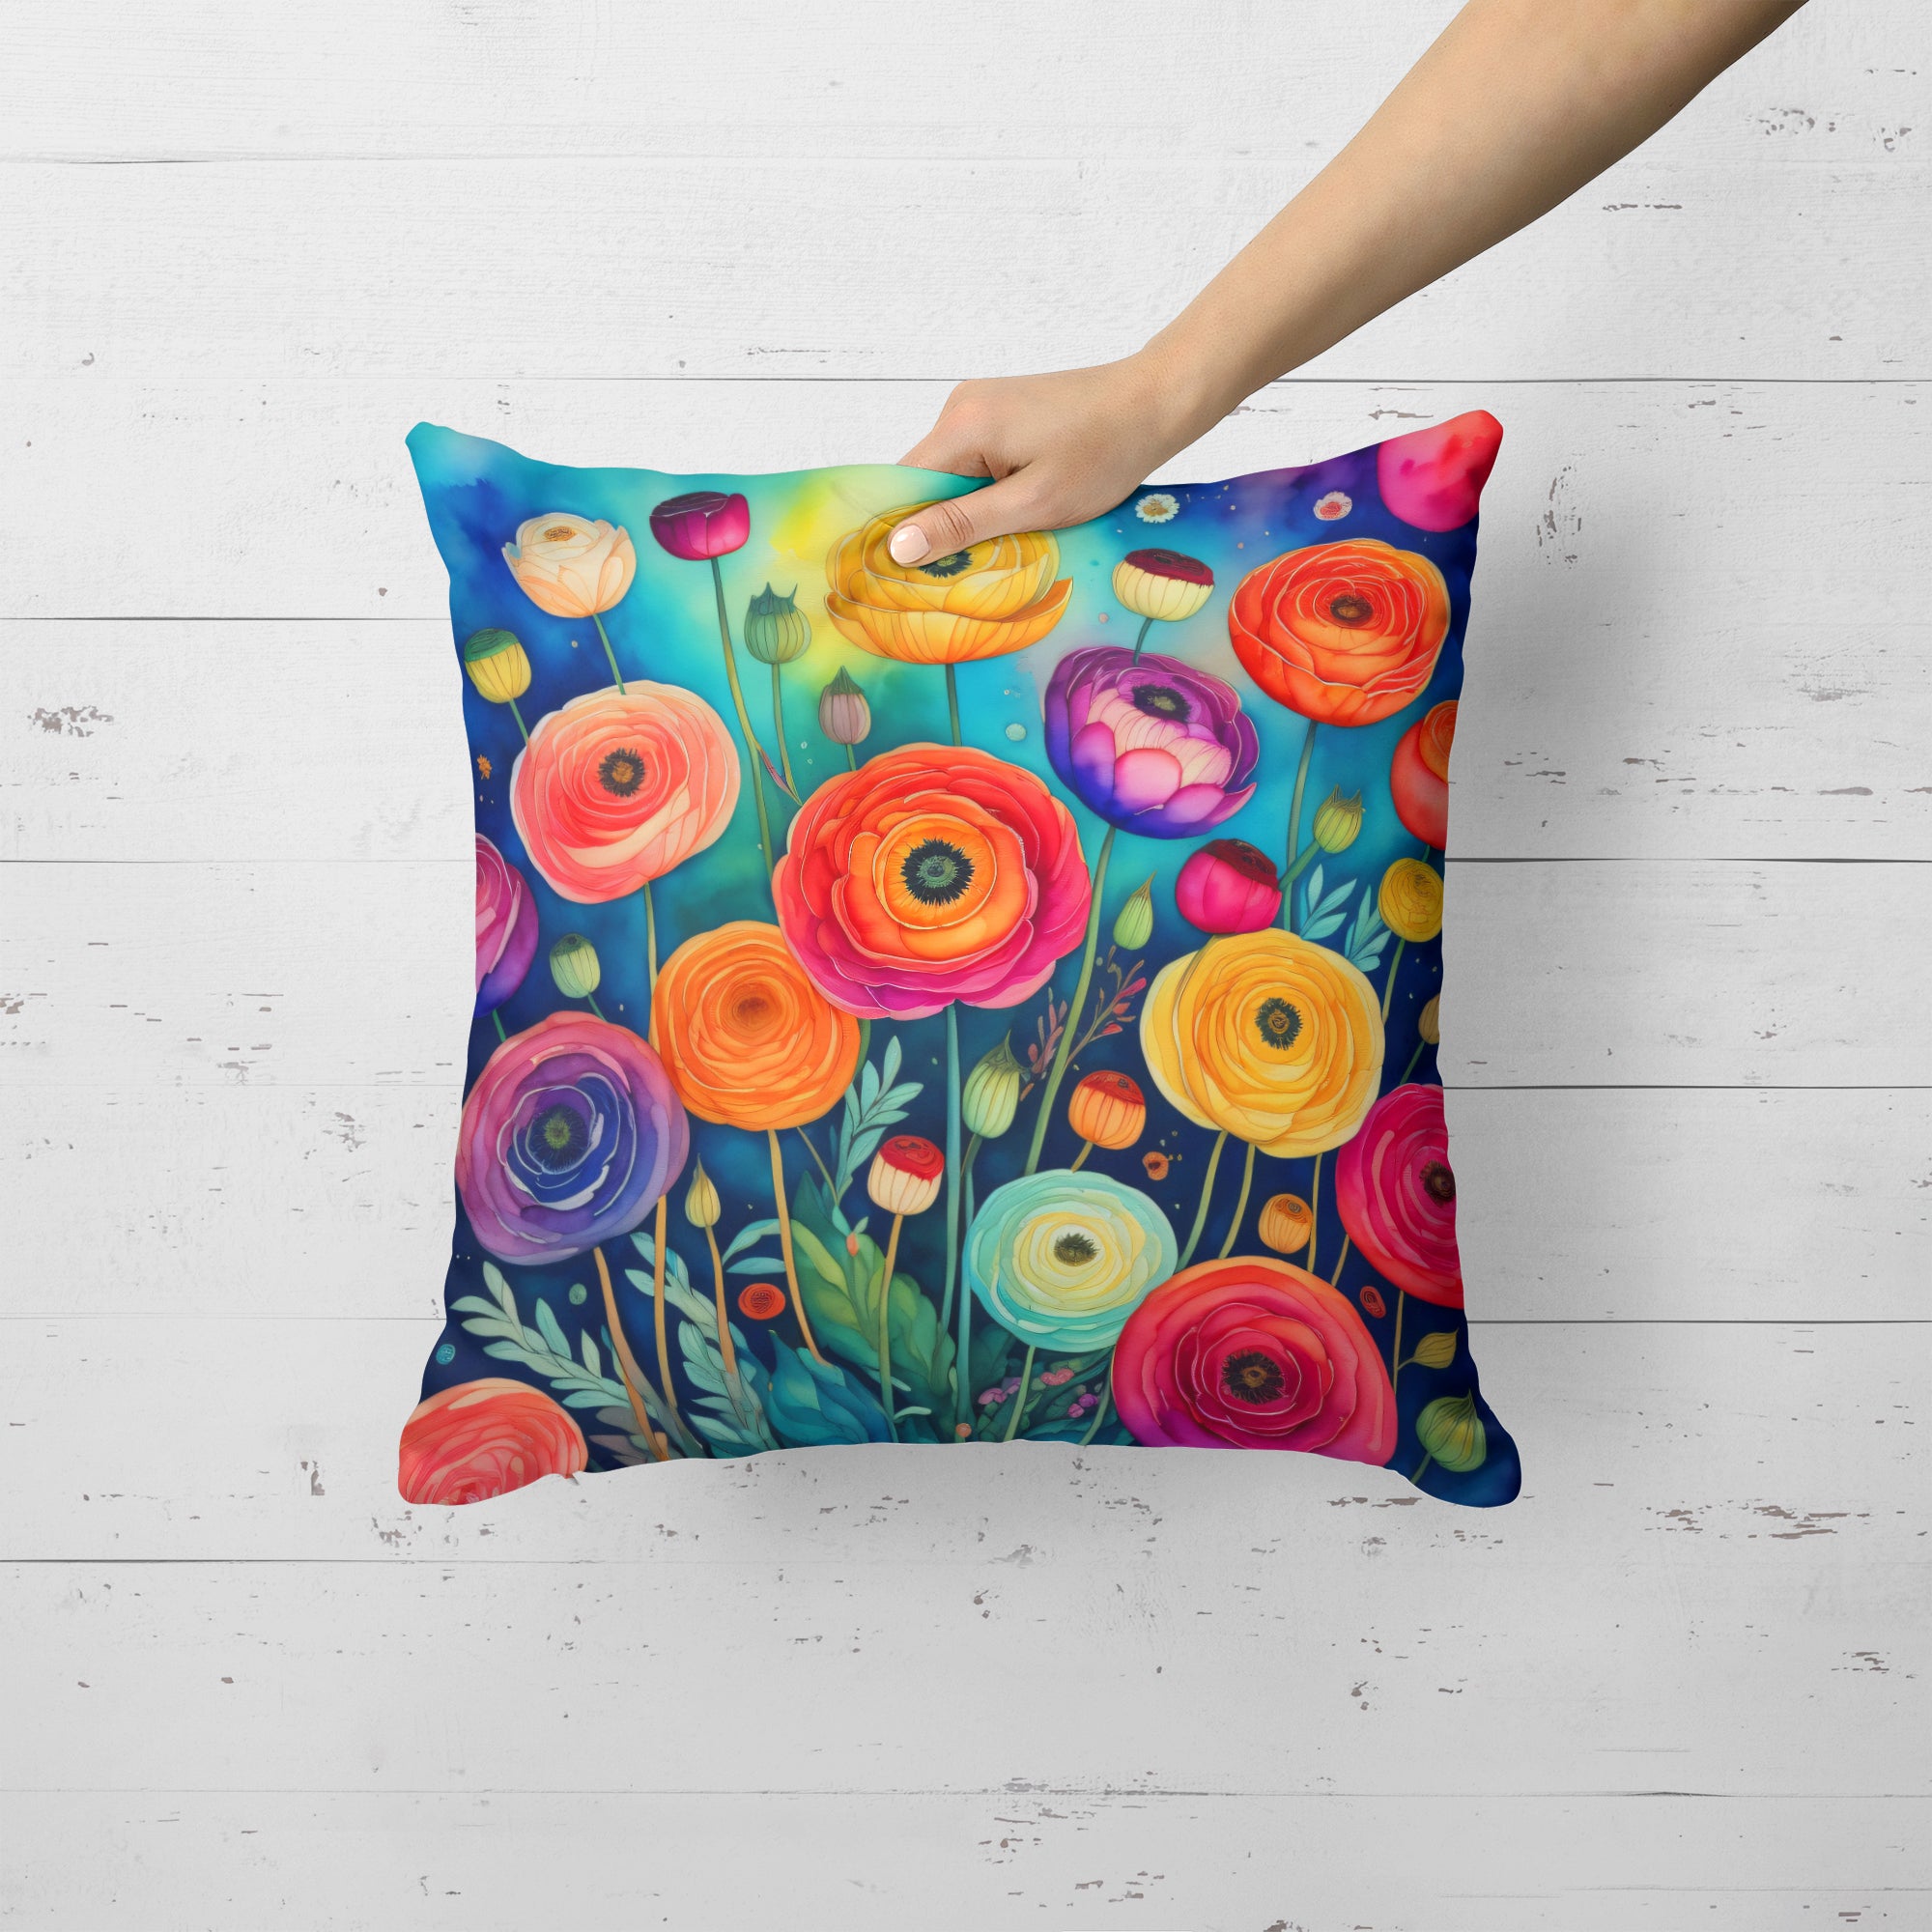 Buy this Colorful Ranunculus Fabric Decorative Pillow